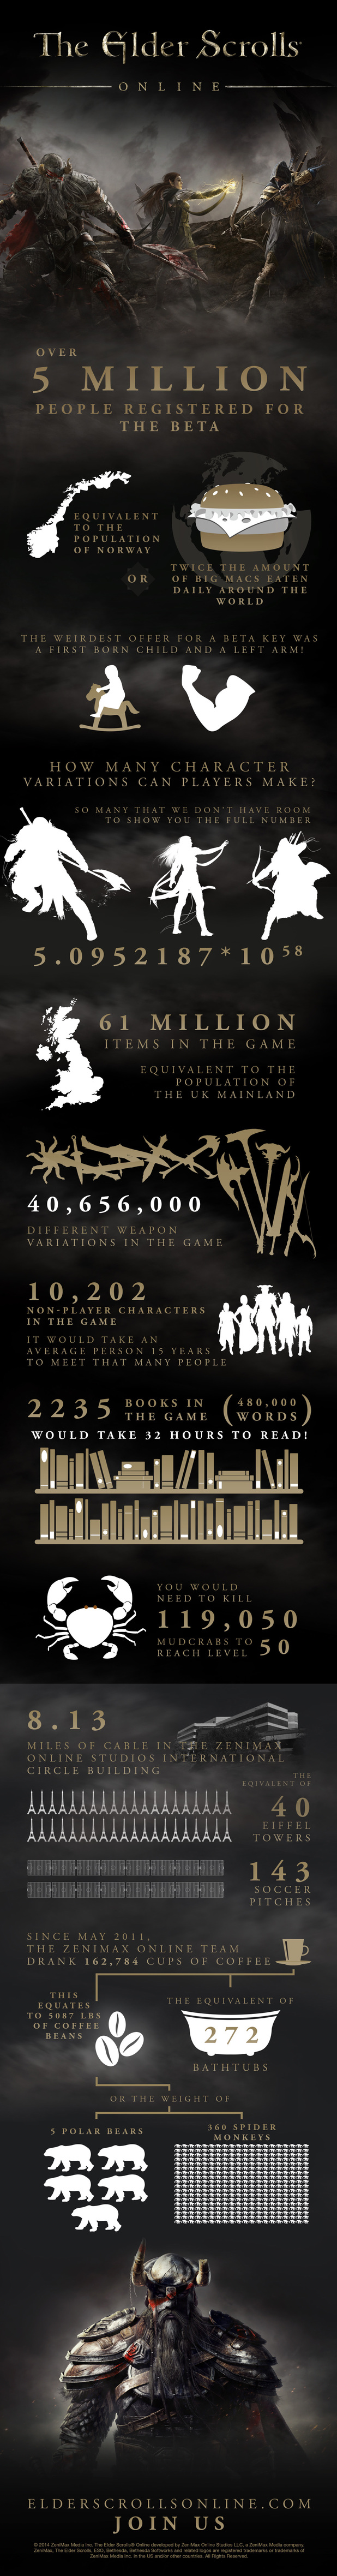 Elder Scrolls Online infographic